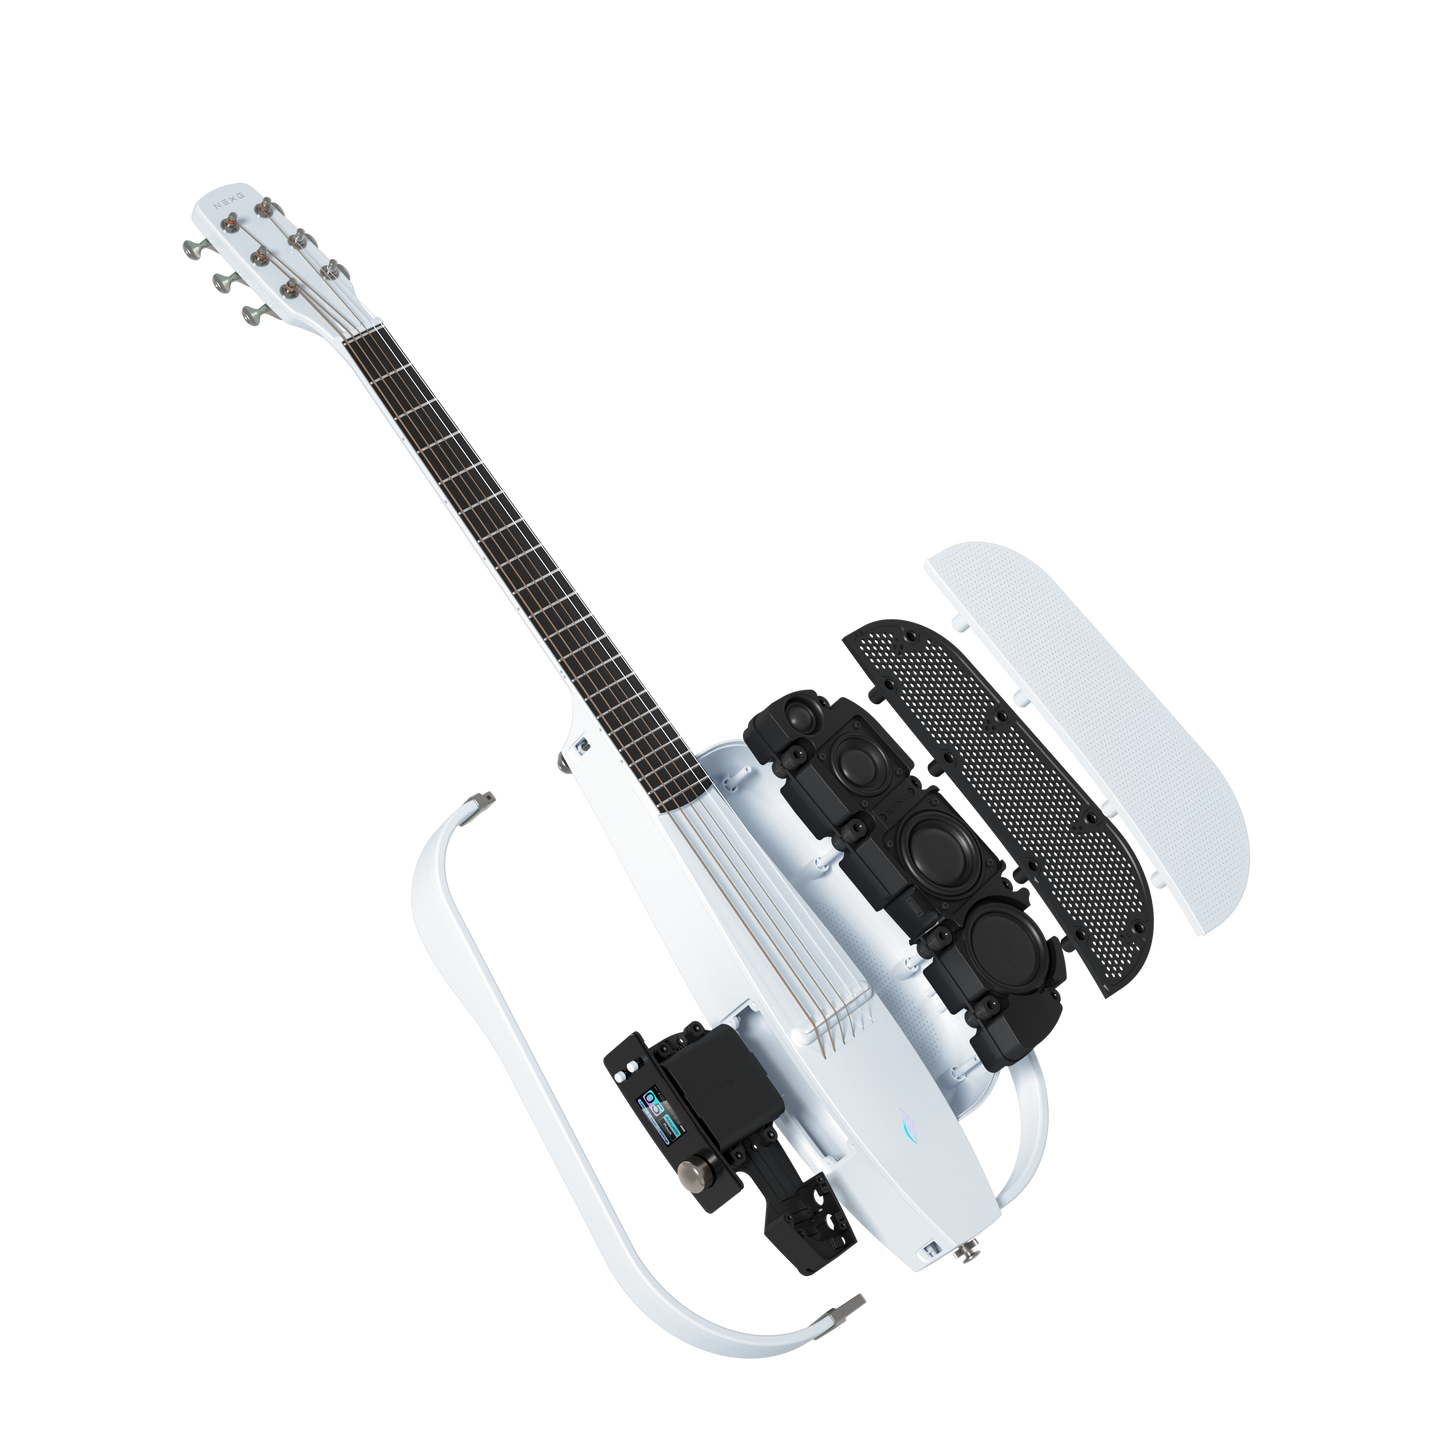 ENYA NEXG 2 Carbon Fiber Guitar White (Deluxe)